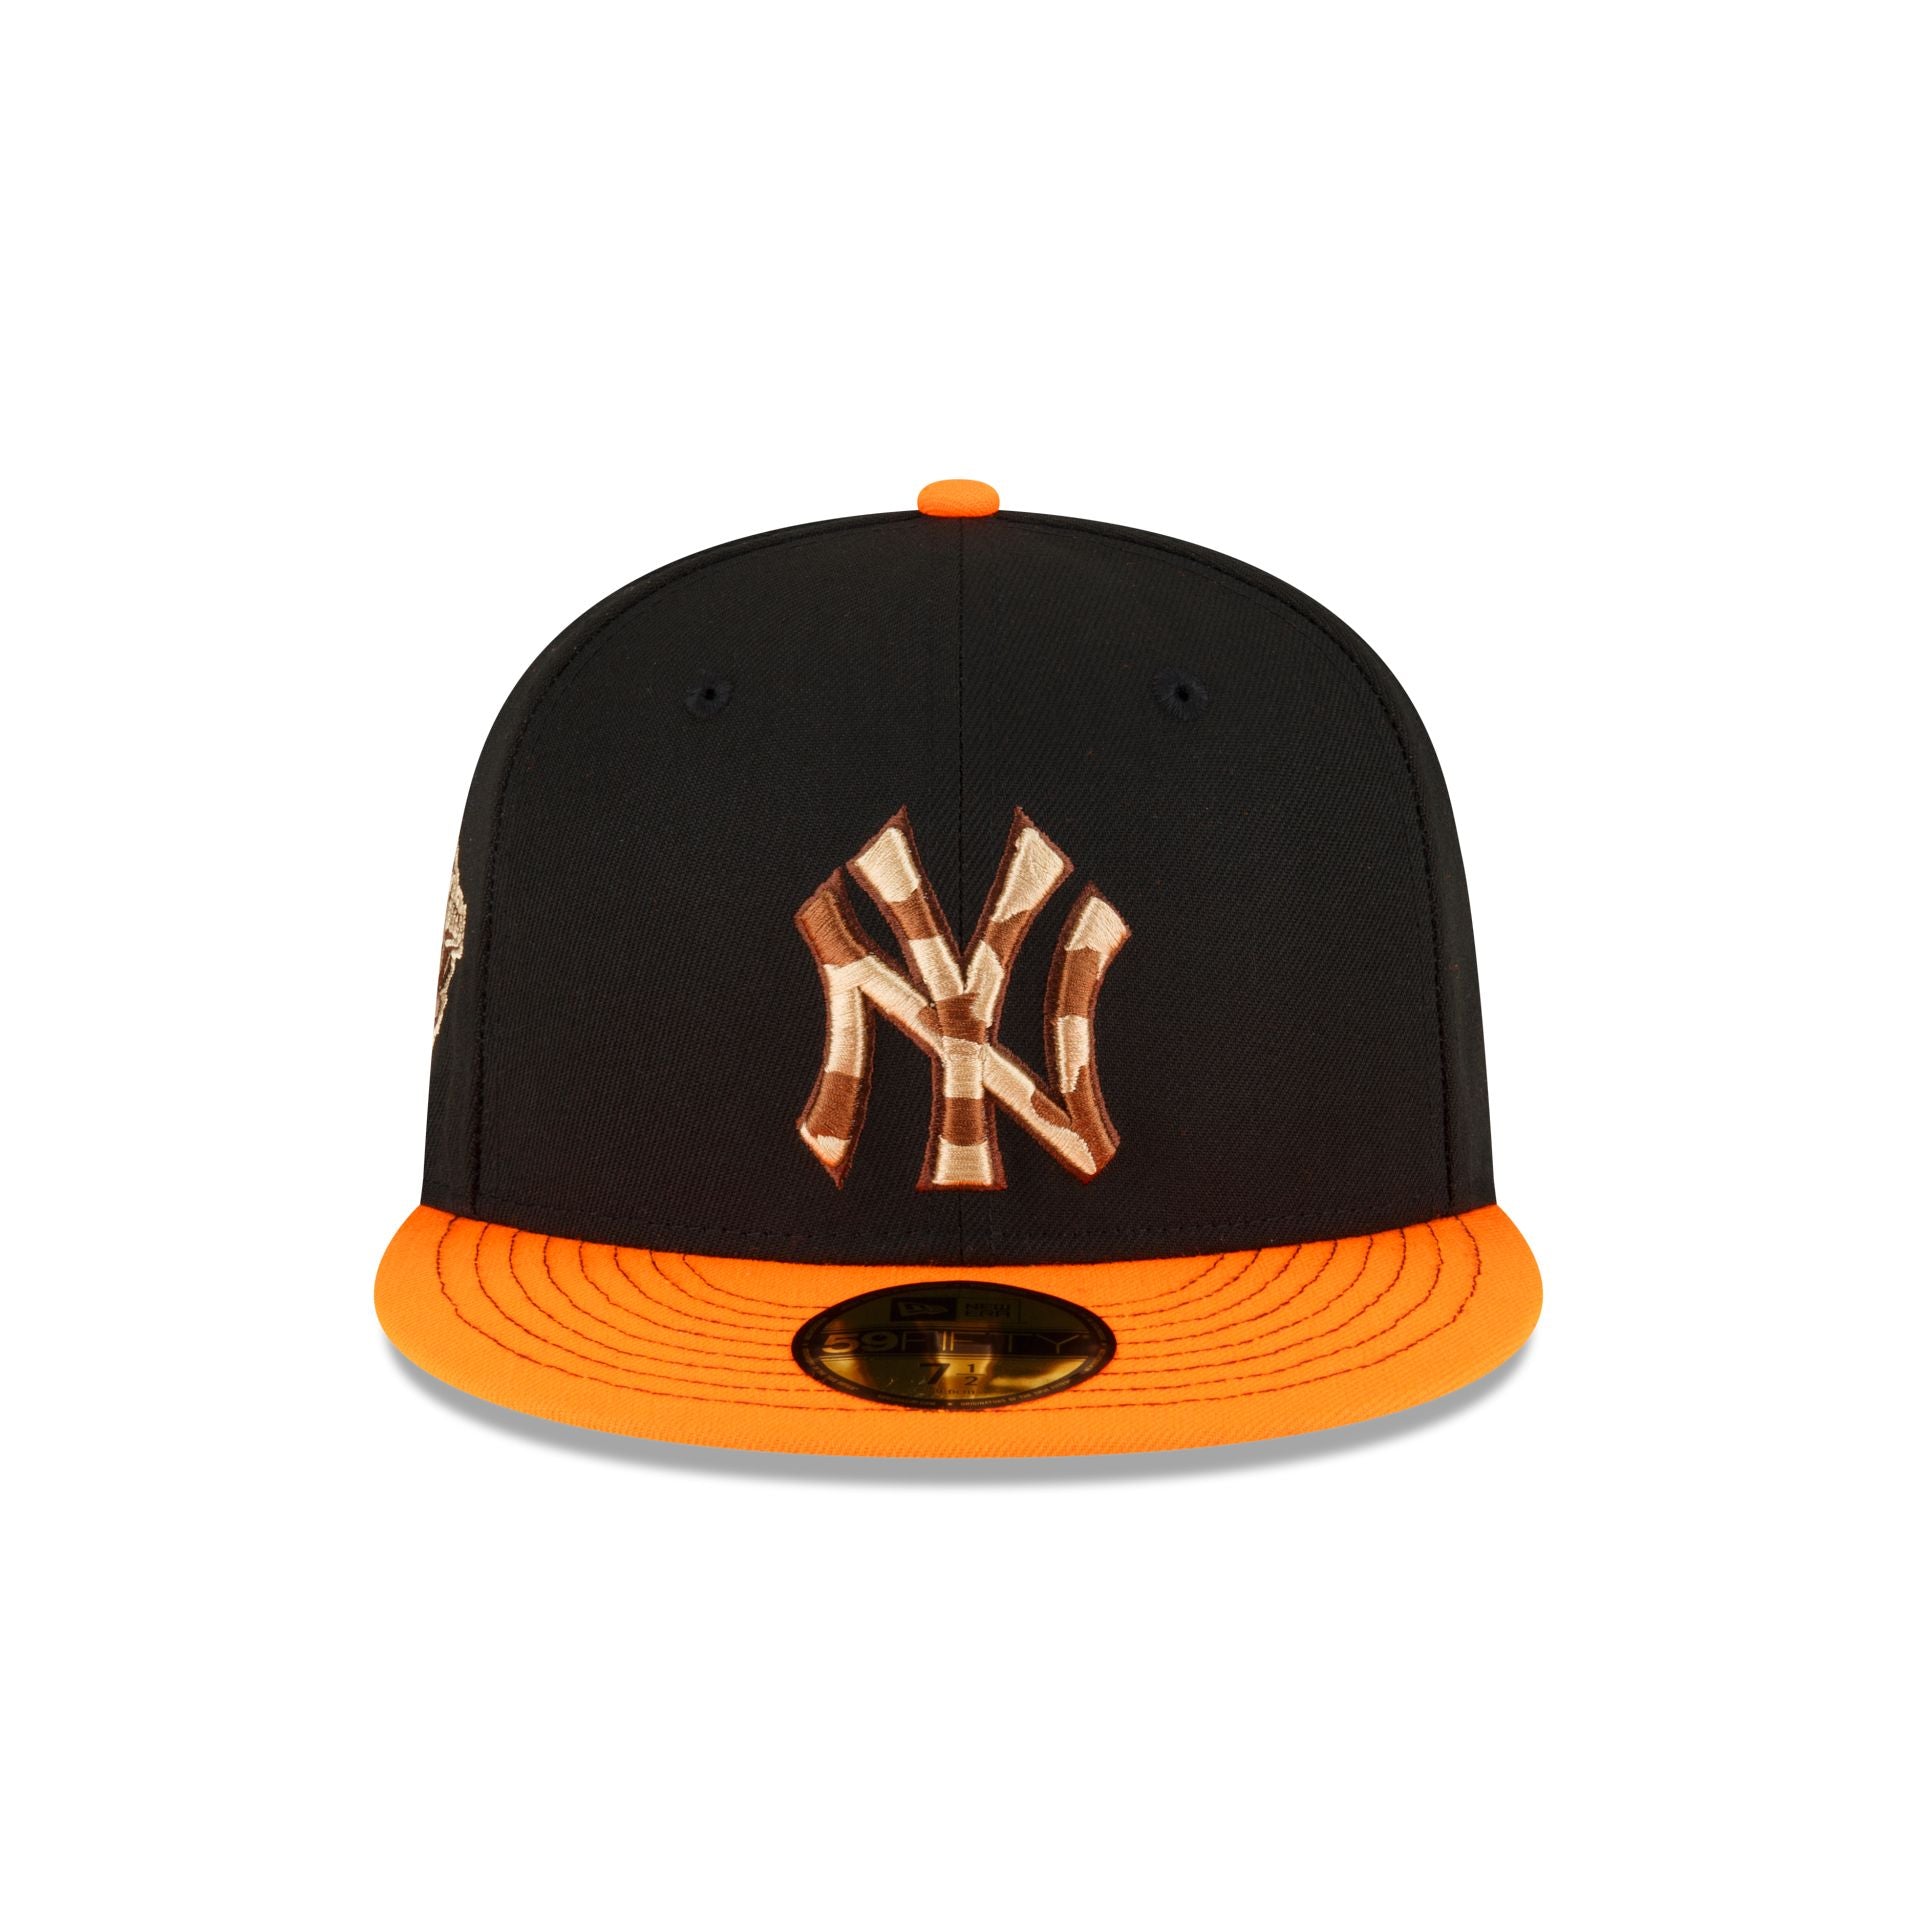 York Orange Visor Yankees Caps Hat New 59FIFTY Just Era – Fitted Cap New